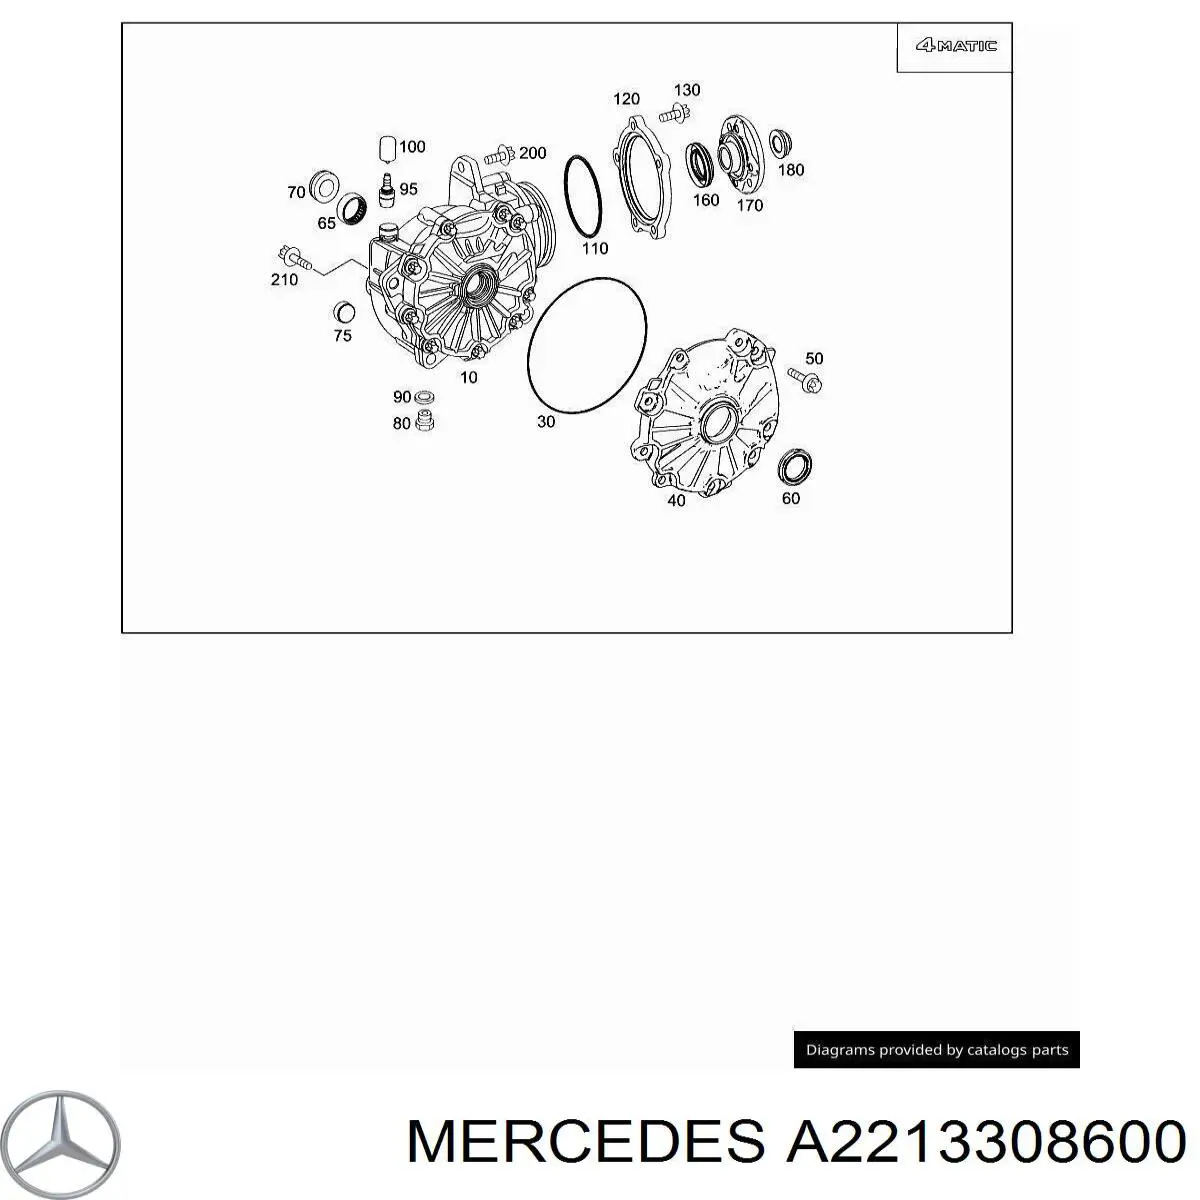 A2213308600 Mercedes